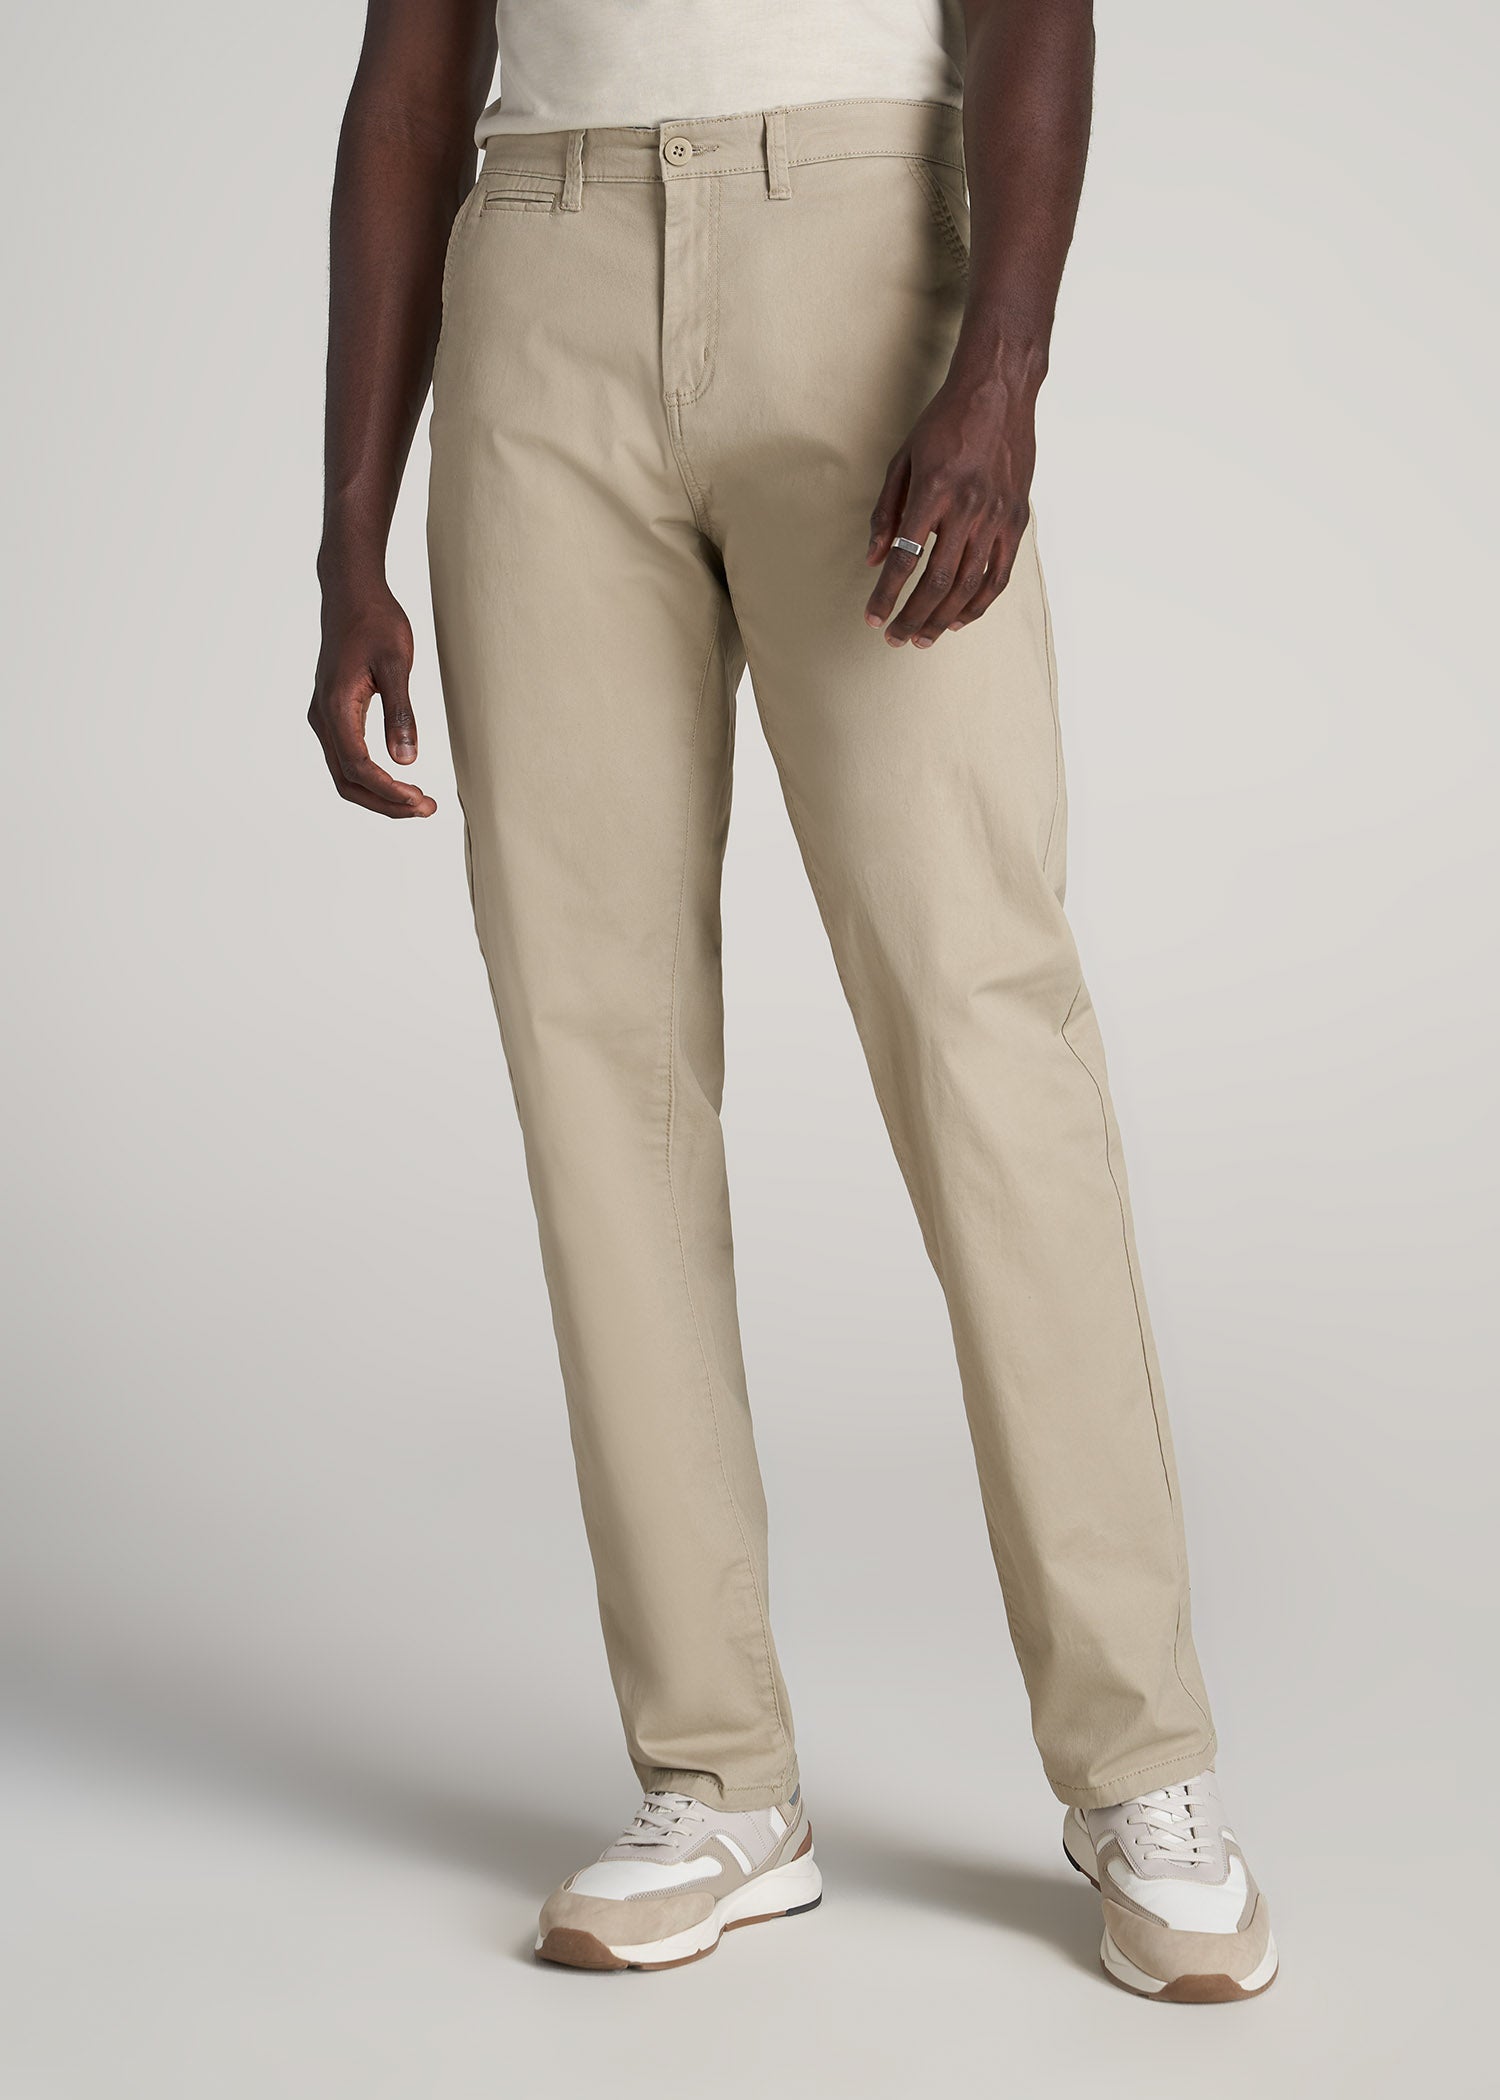 Men khaki pants outfits- 30 ideal ways to style khaki pants